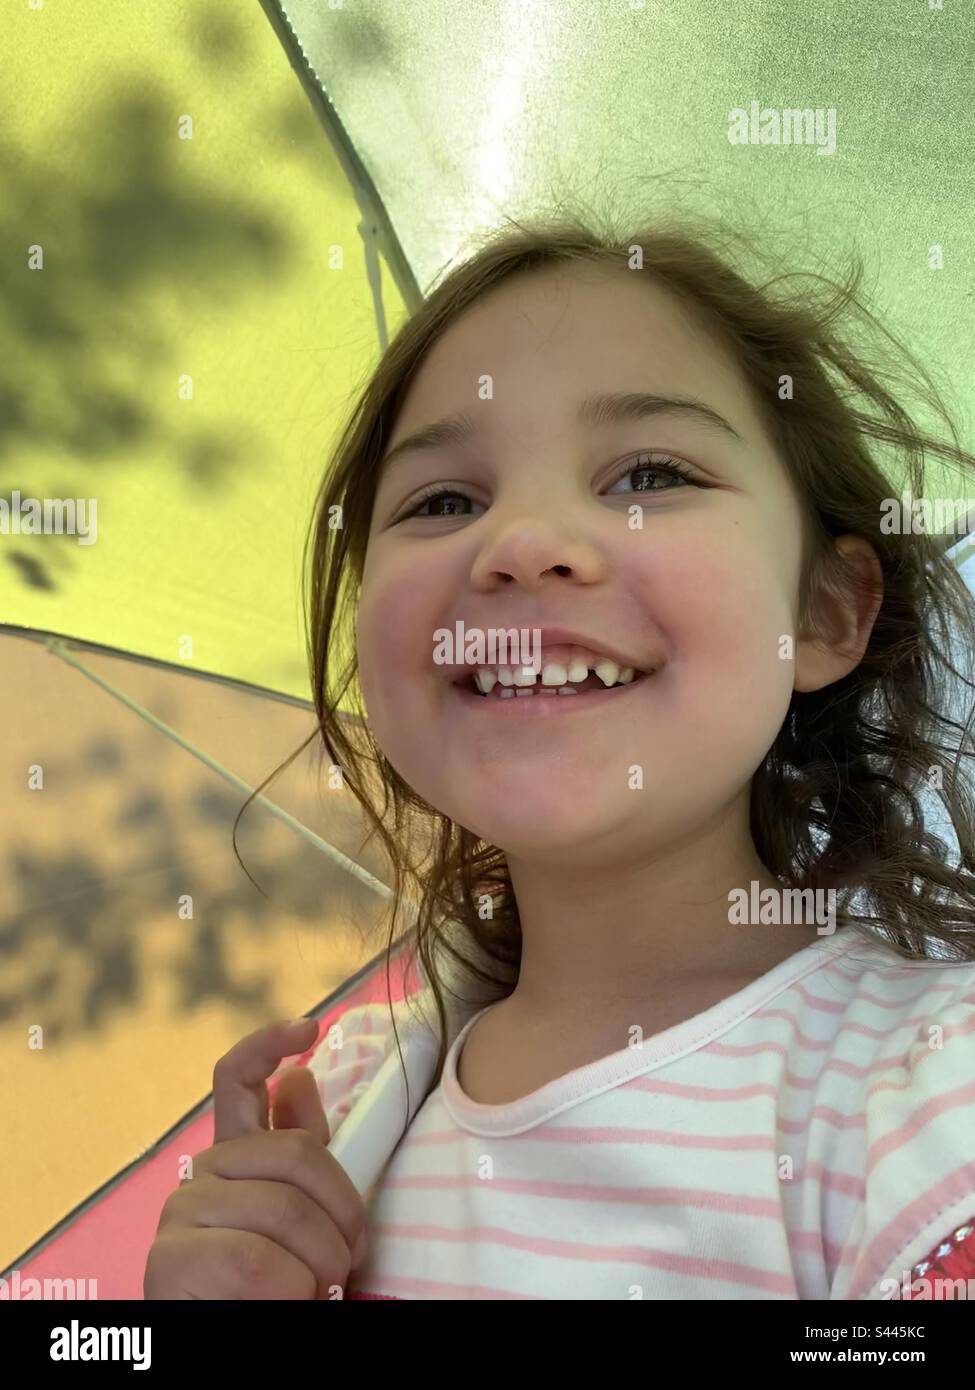 Smiling happy toddler girl under rainbow umbrella in summer sun. Stock Photo